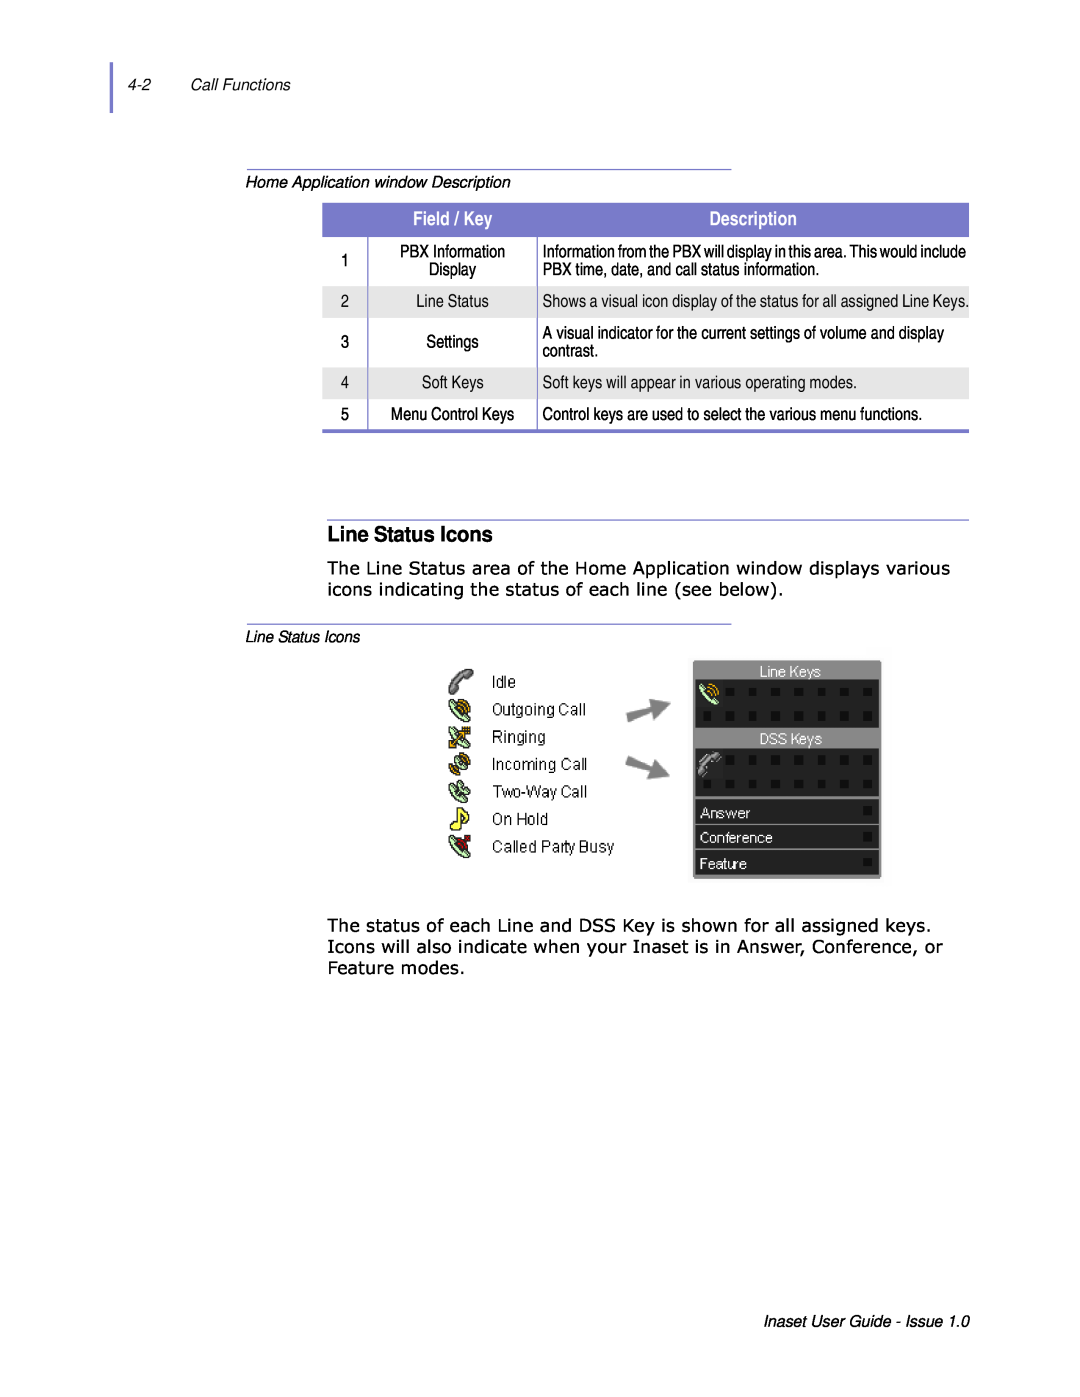 NEC NEAX 2000 IPS Line Status Icons, Field / Key, Call Functions Home Application window Description, PBX Information 